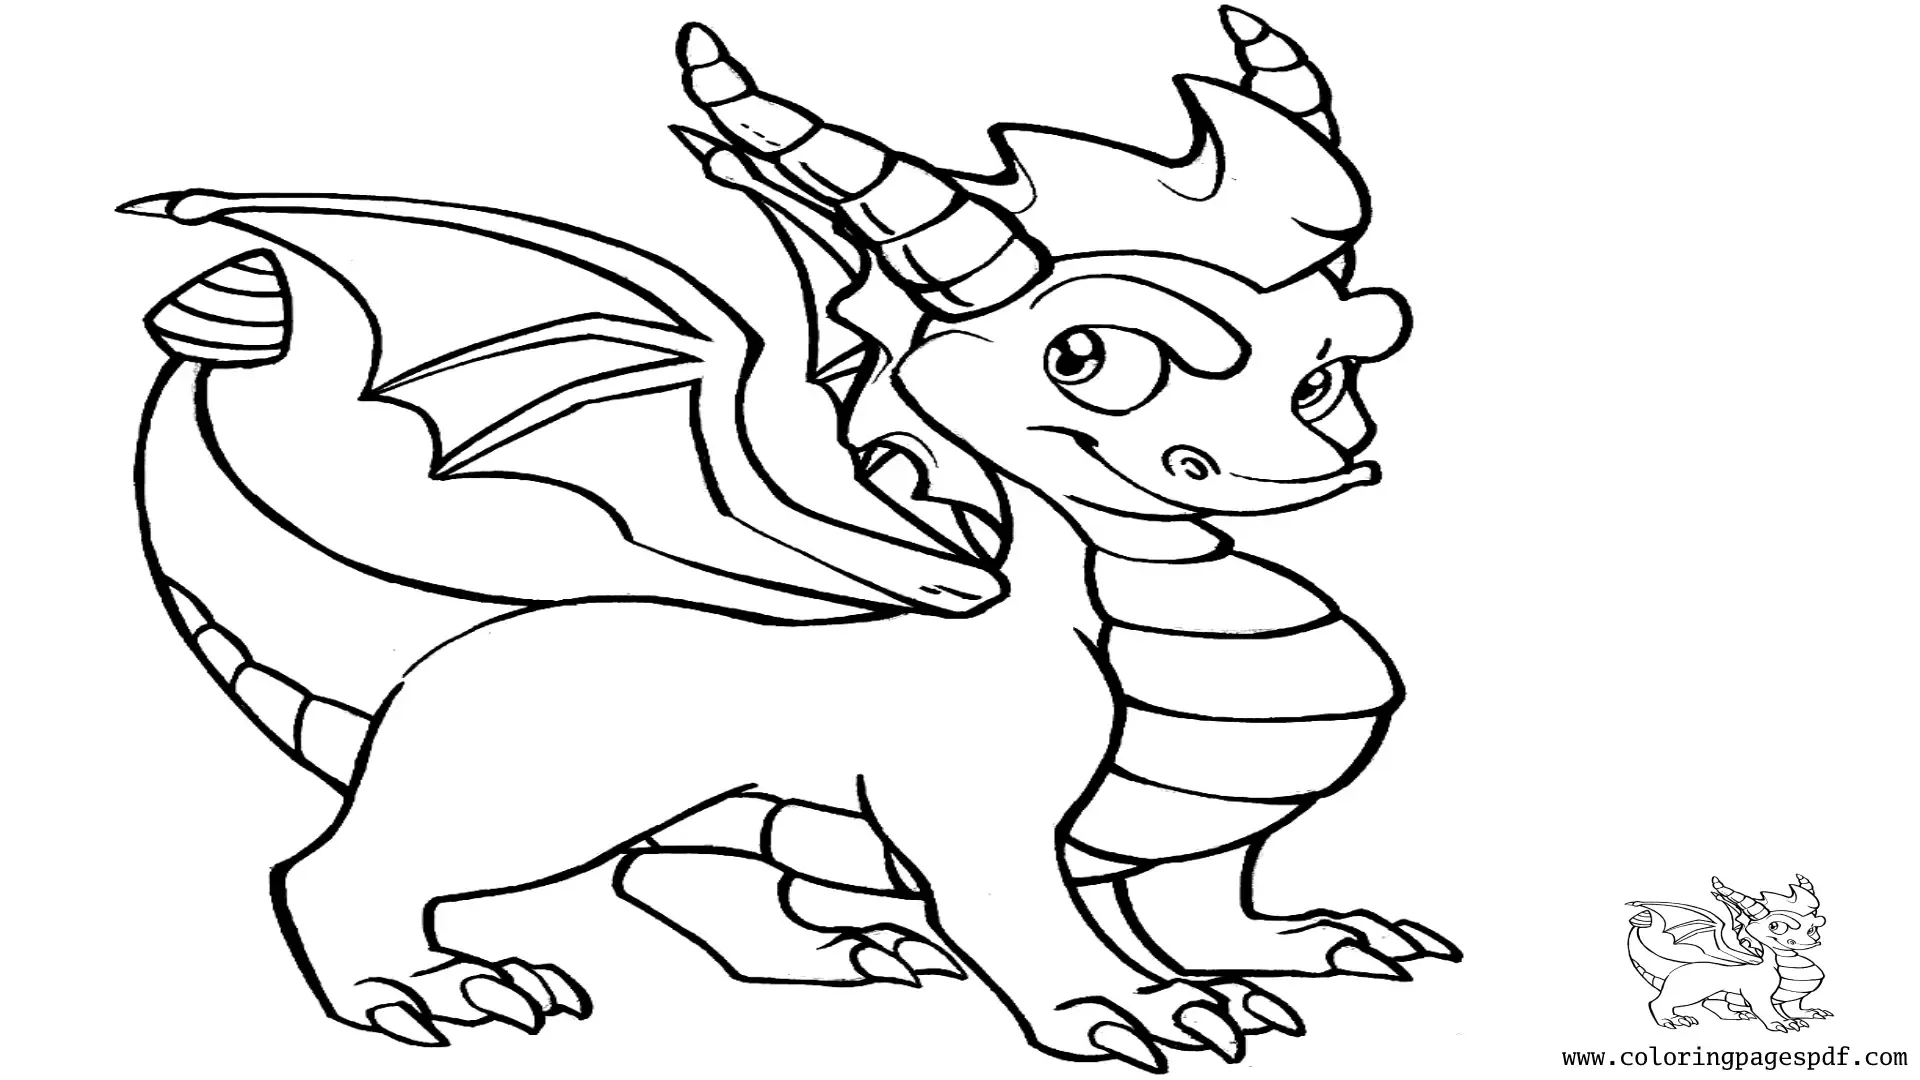 Coloring Page Of A Cartoon Baby Dragon